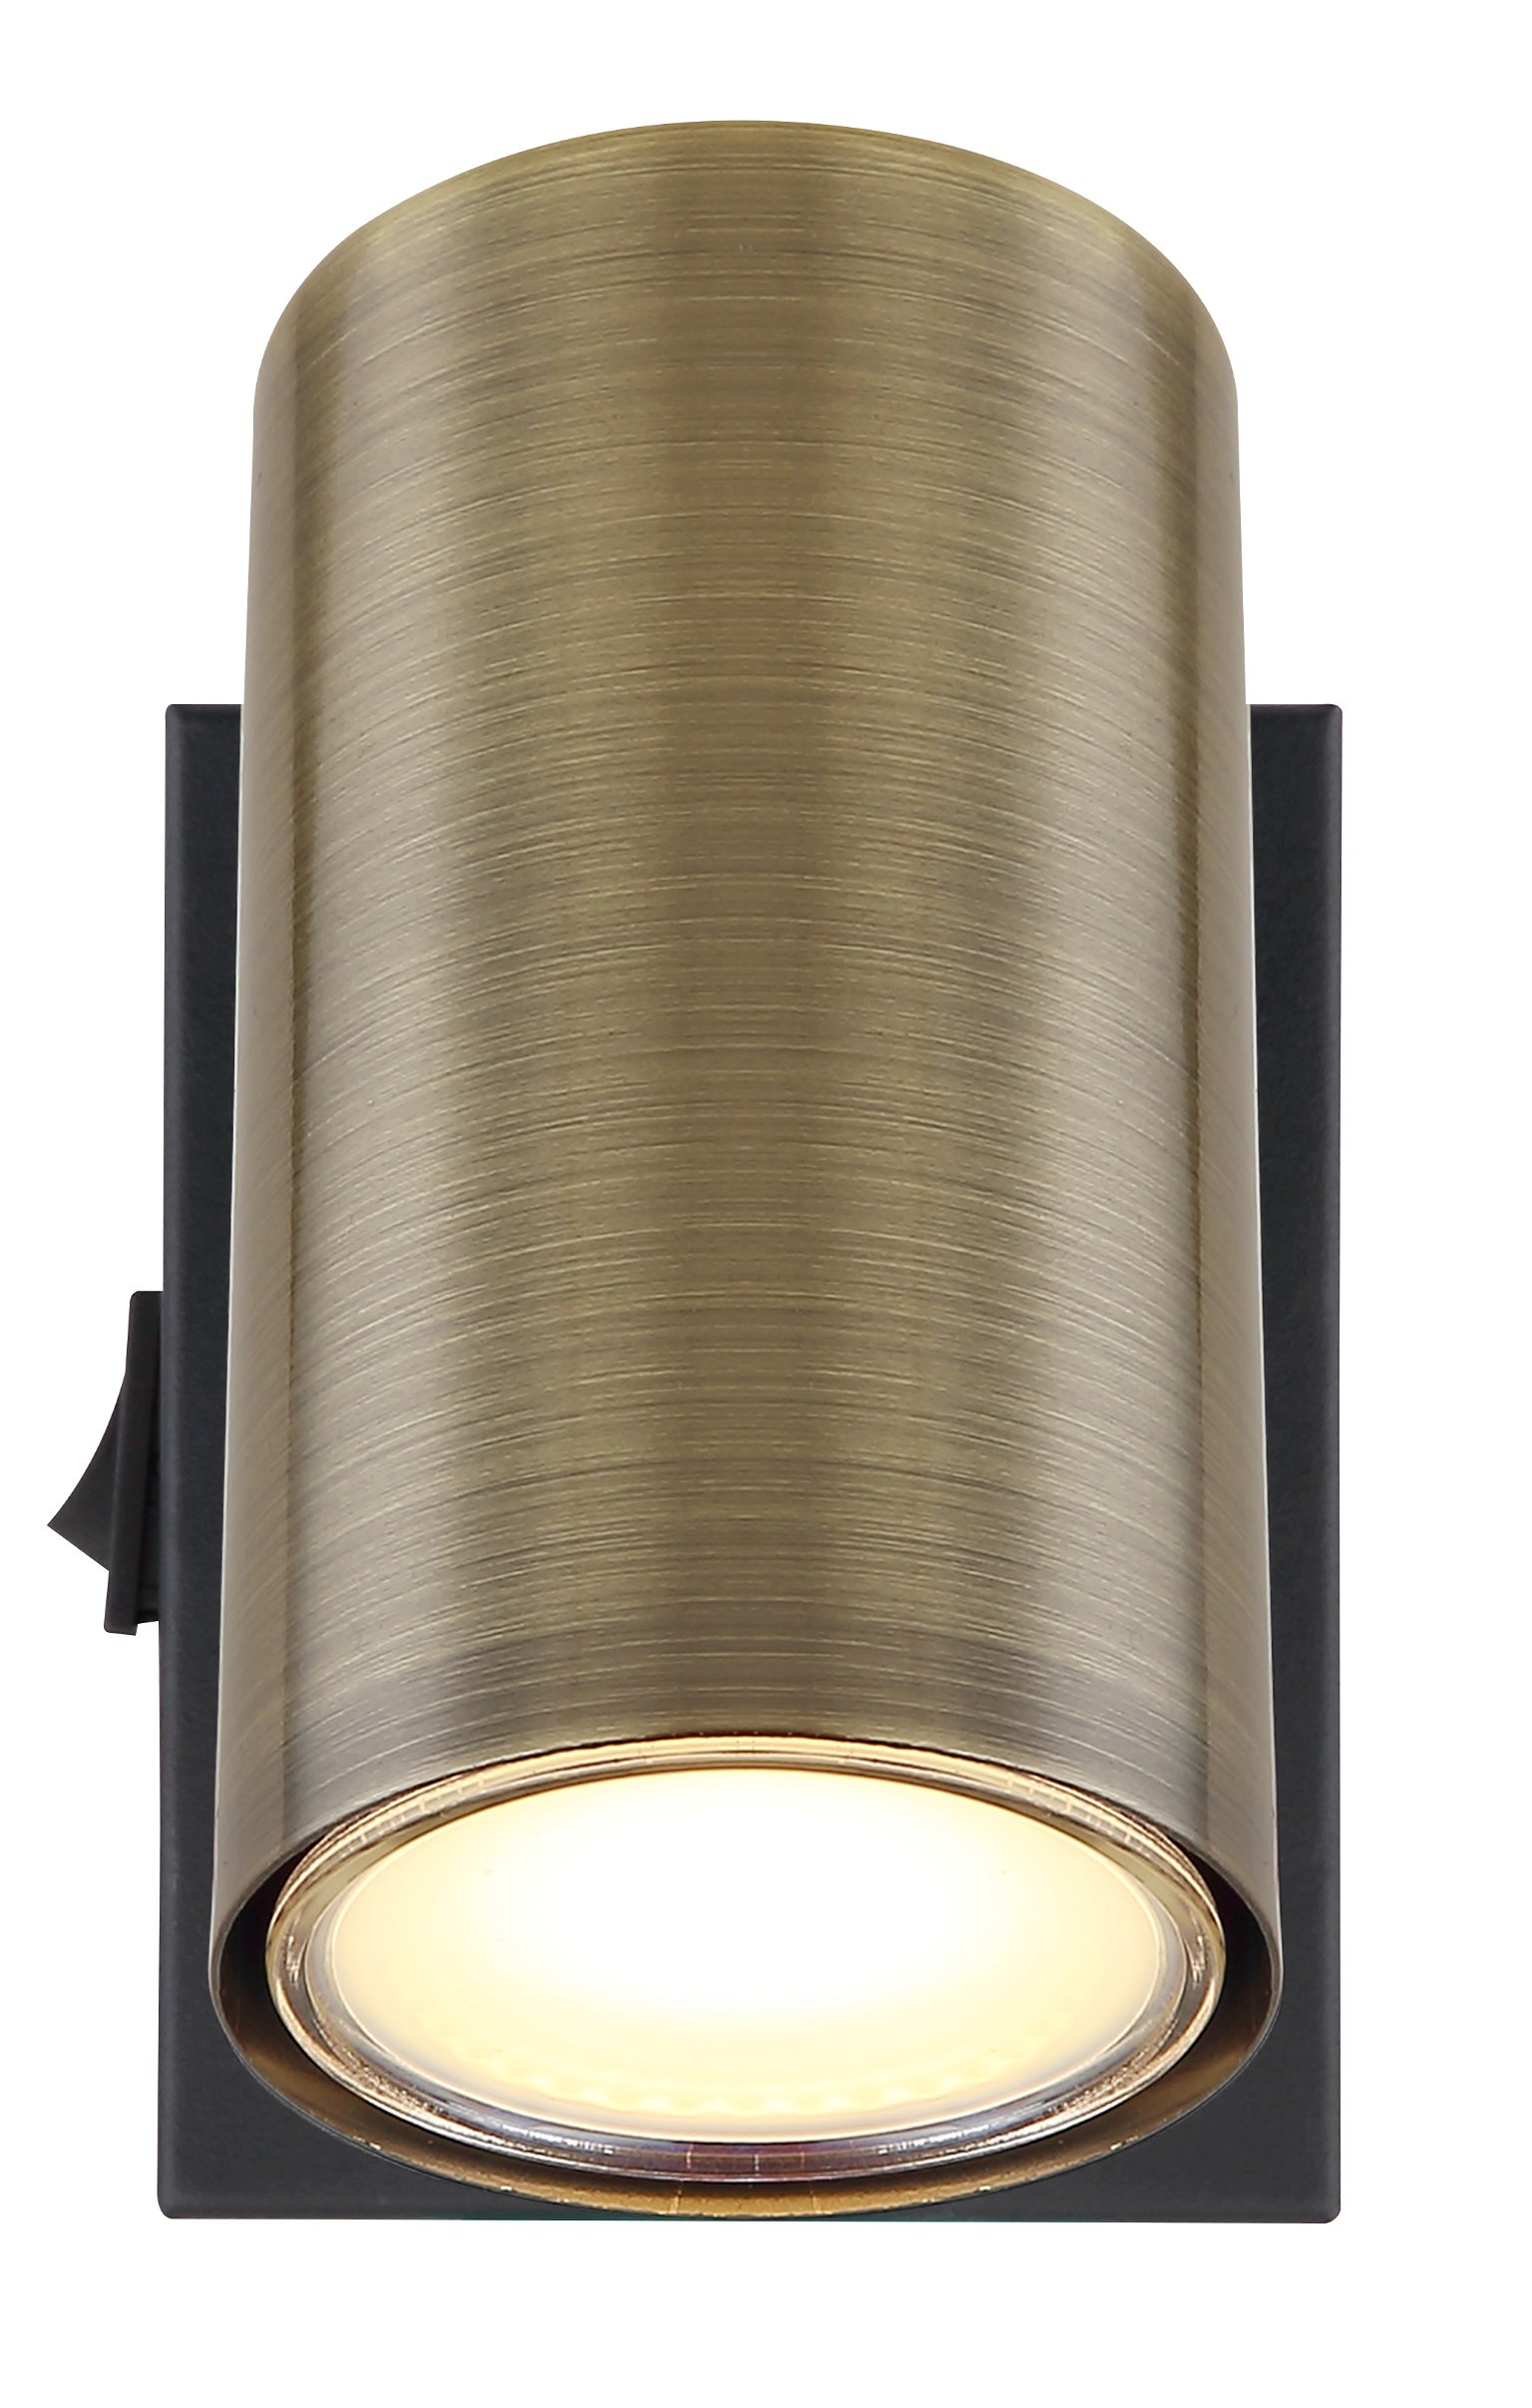 Taškinis šviestuvas GLOBO Robby, 1 x GU10, 25W, žalvario/ juodos sp., 7 x 10 x 12 cm - 3